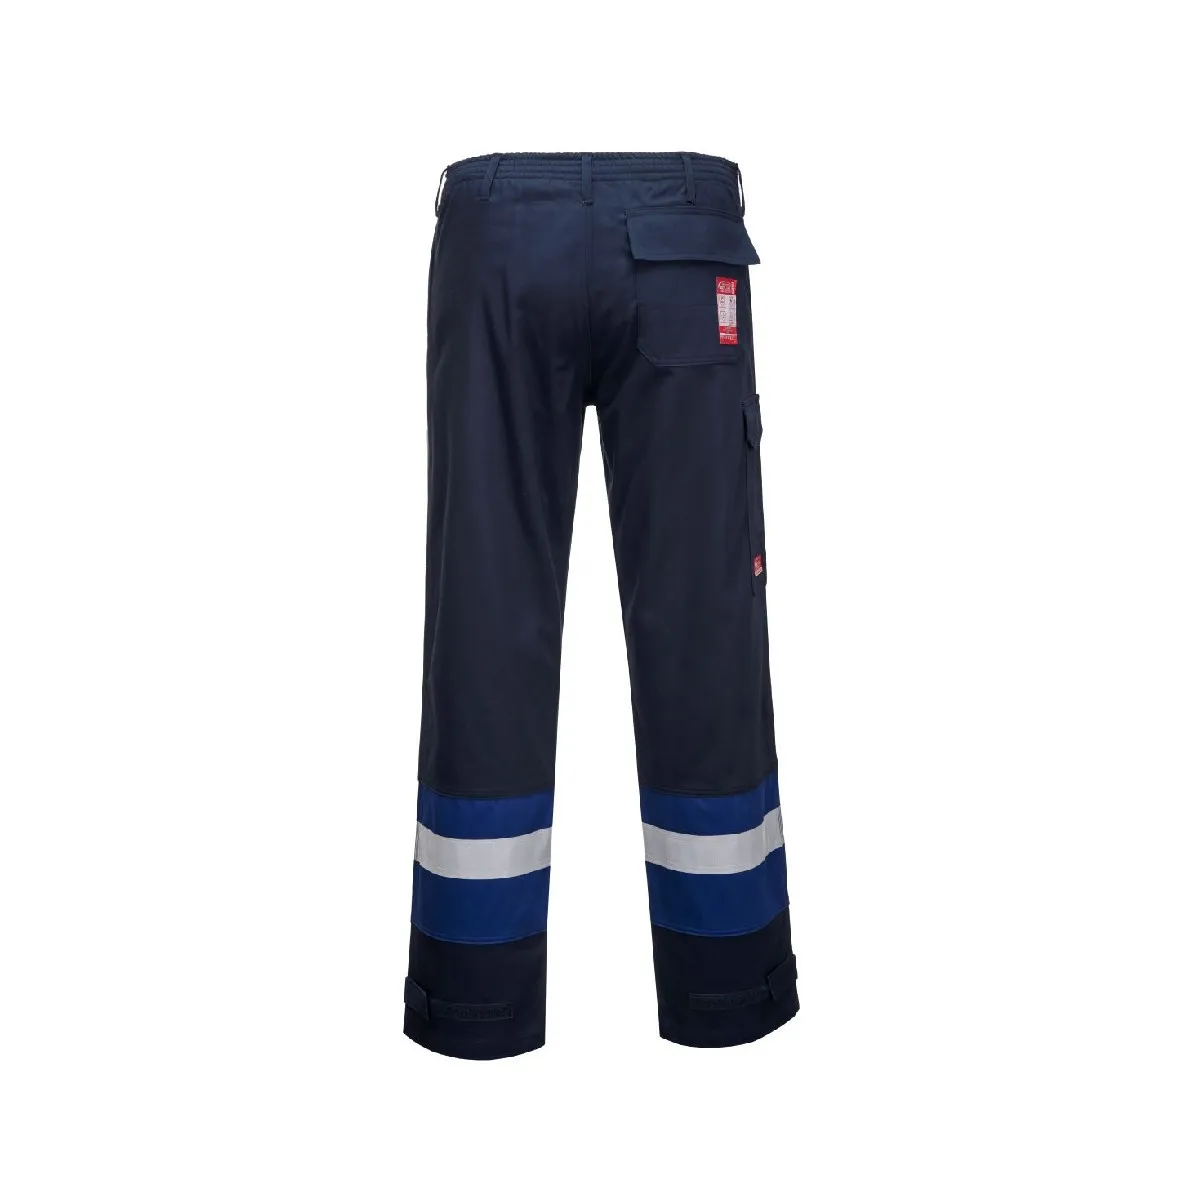 Vatrootporne pantalone FR56 plave - Portwest 